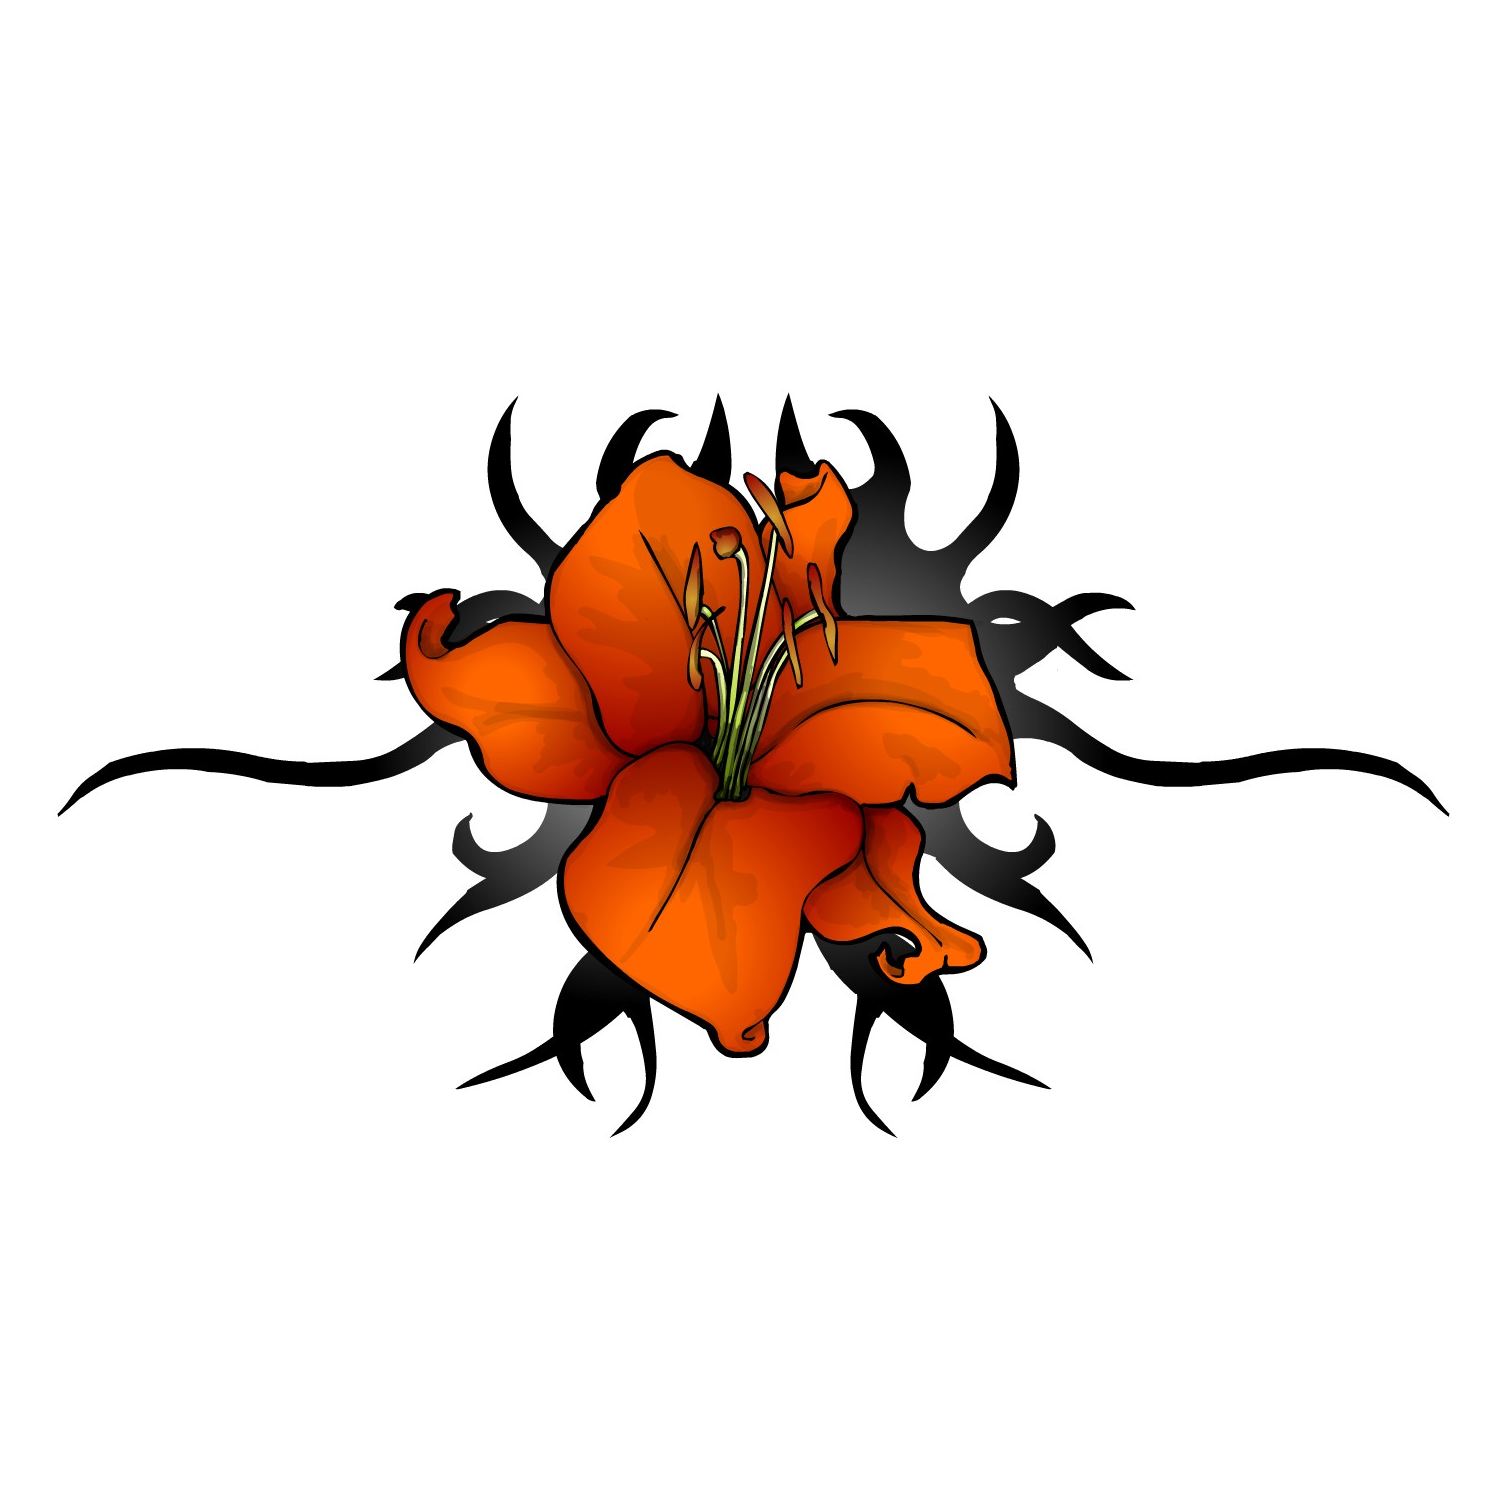 Lily Flower Tattoo Ideas - ClipArt Best